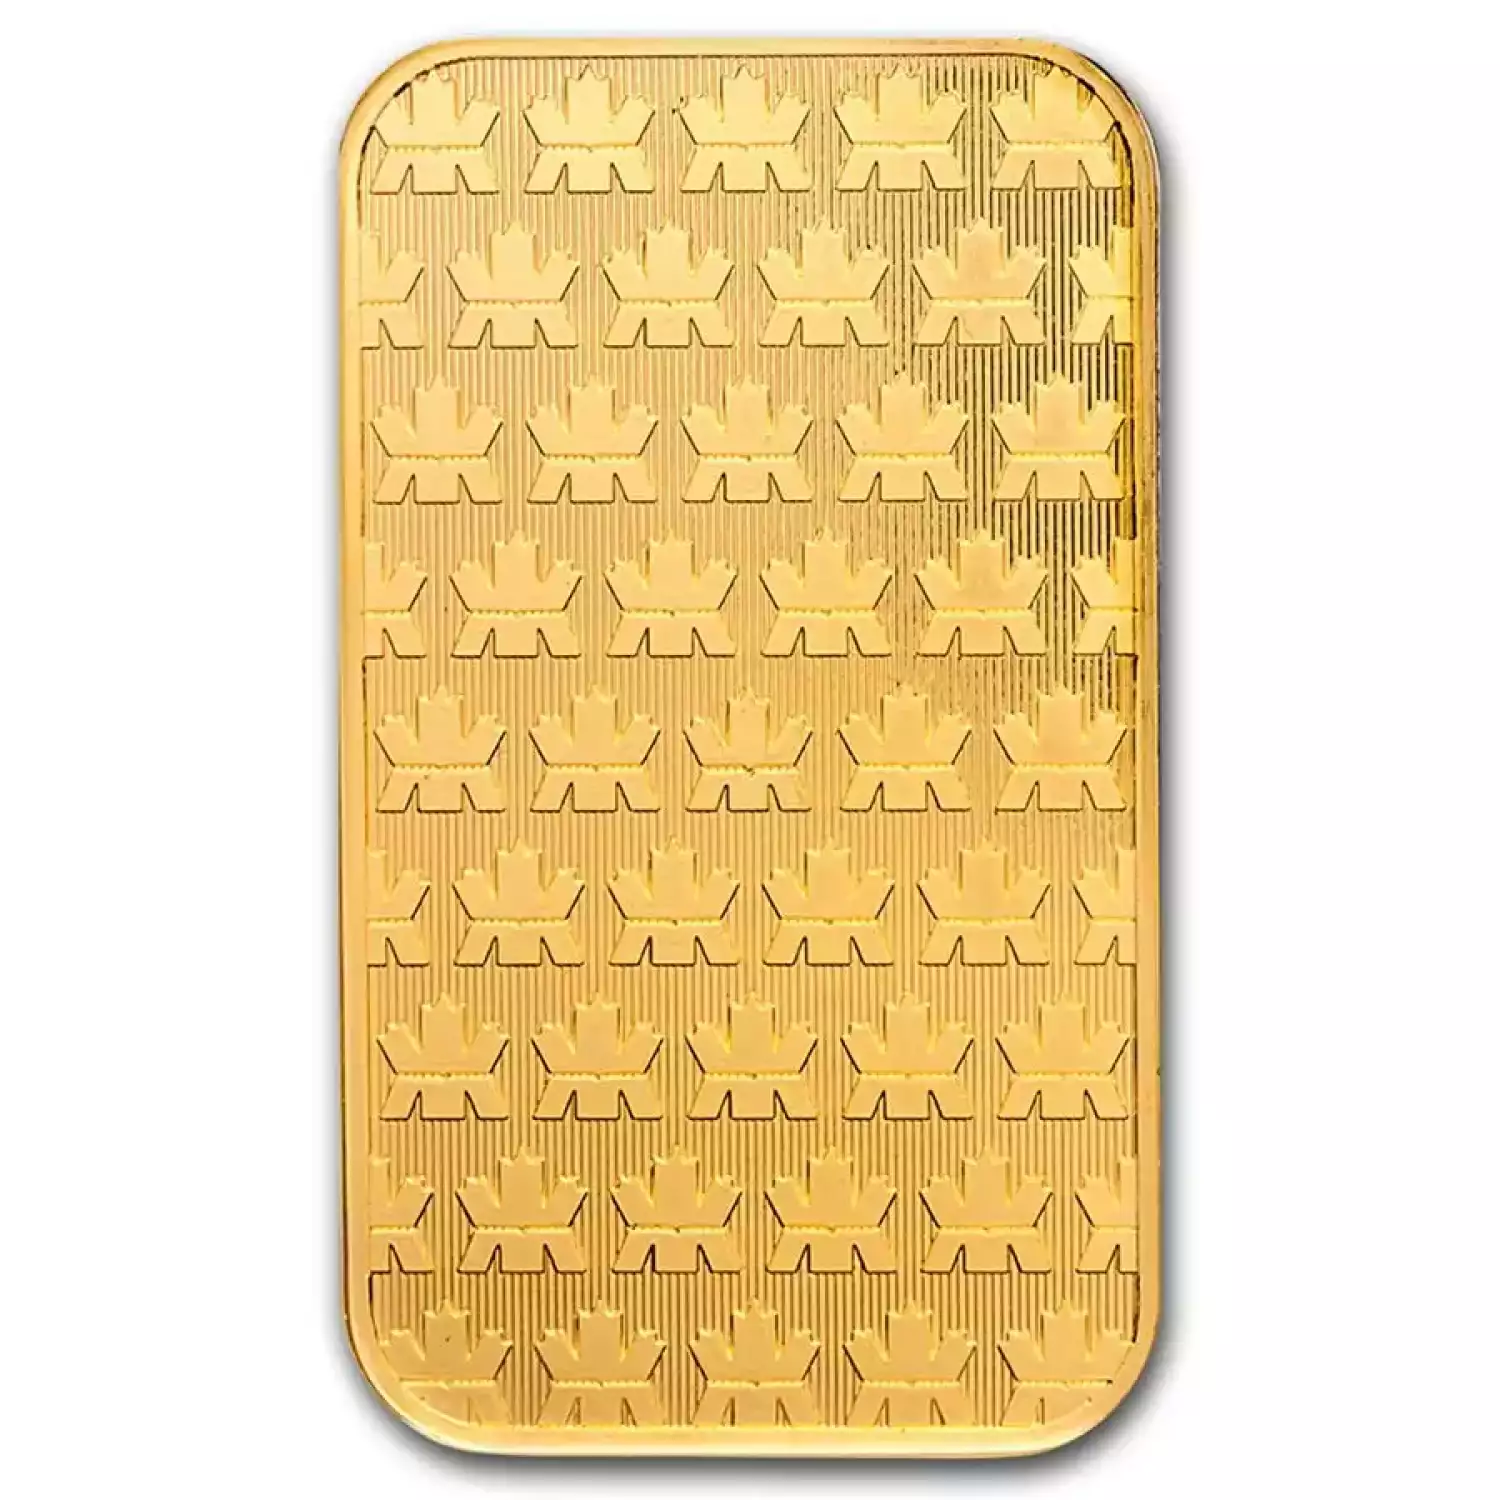 1 oz (RCM) Royal Canadian Mint Gold Bar (New w/ Assay) (4)